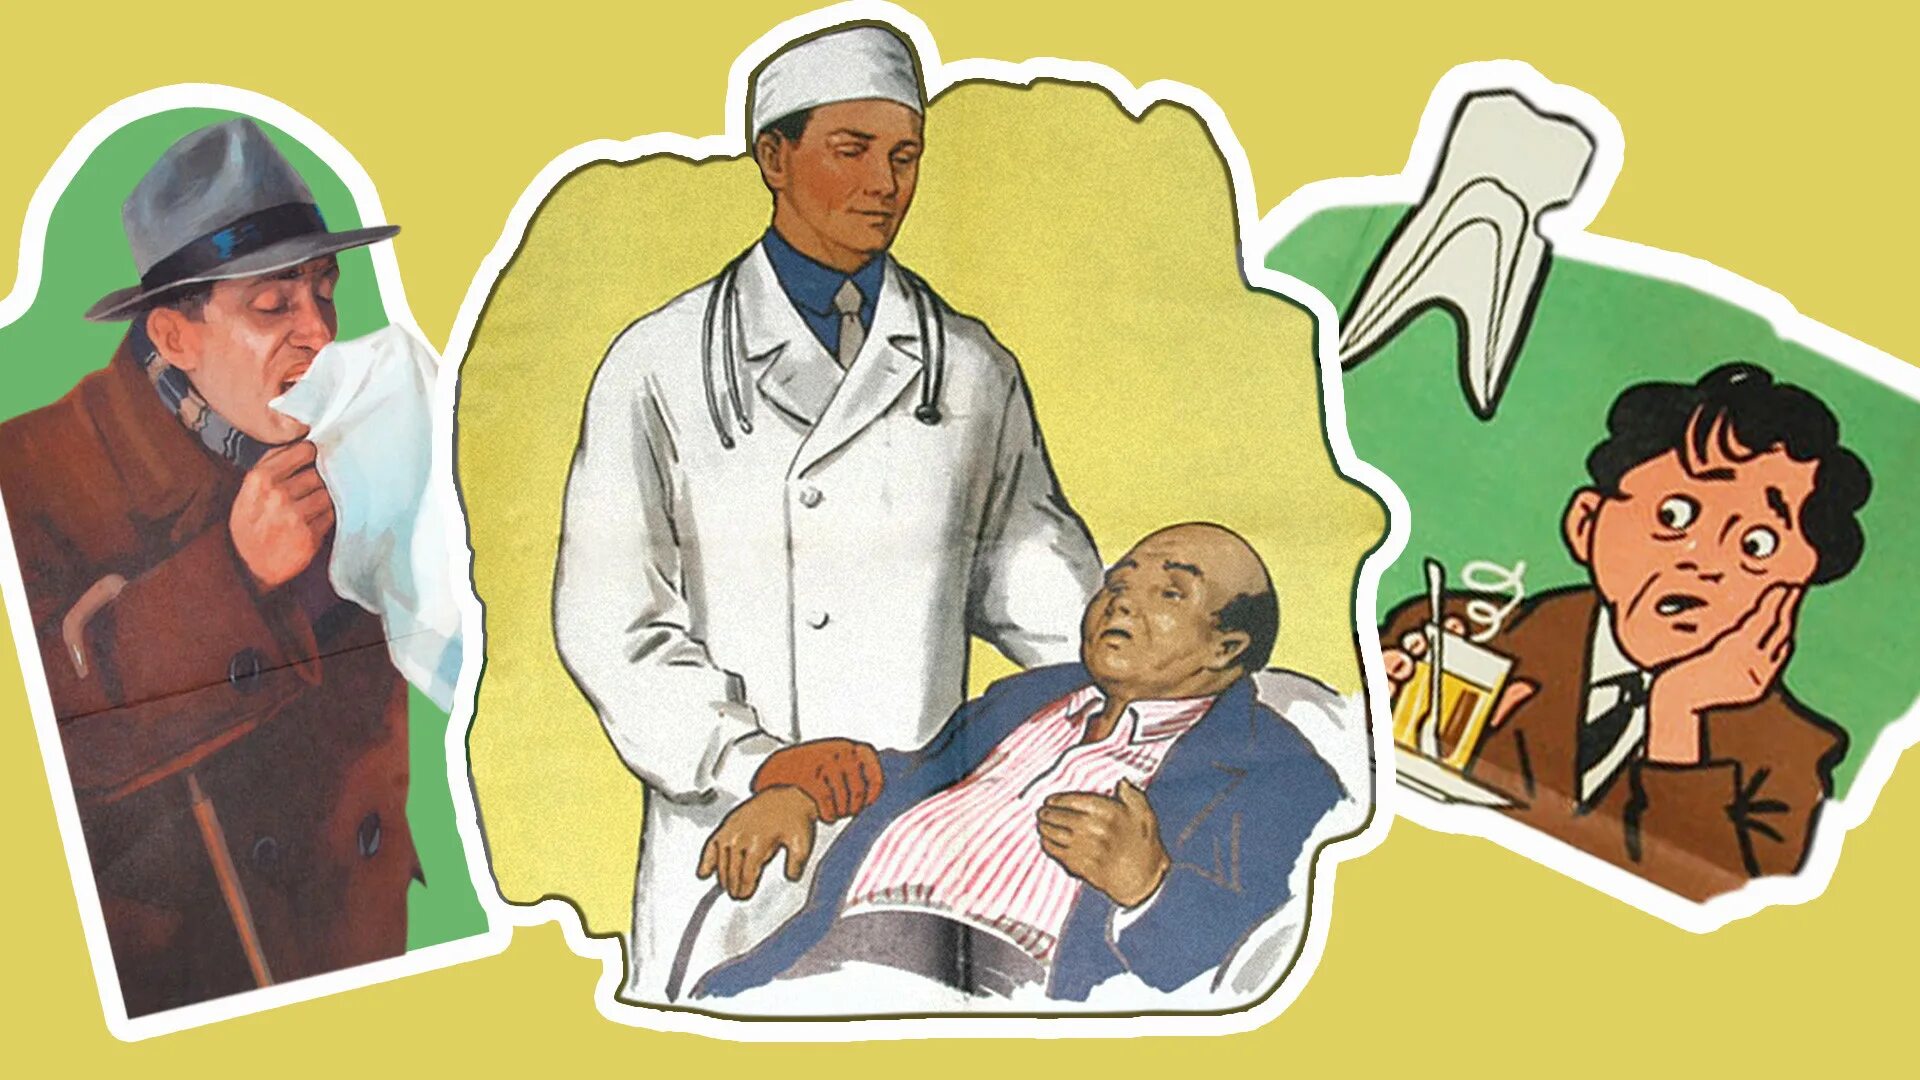 История болезни плакат. Советские плакаты. Плакат медицина. Советские врачебные плакаты. Советские медицинские агитационные плакаты.